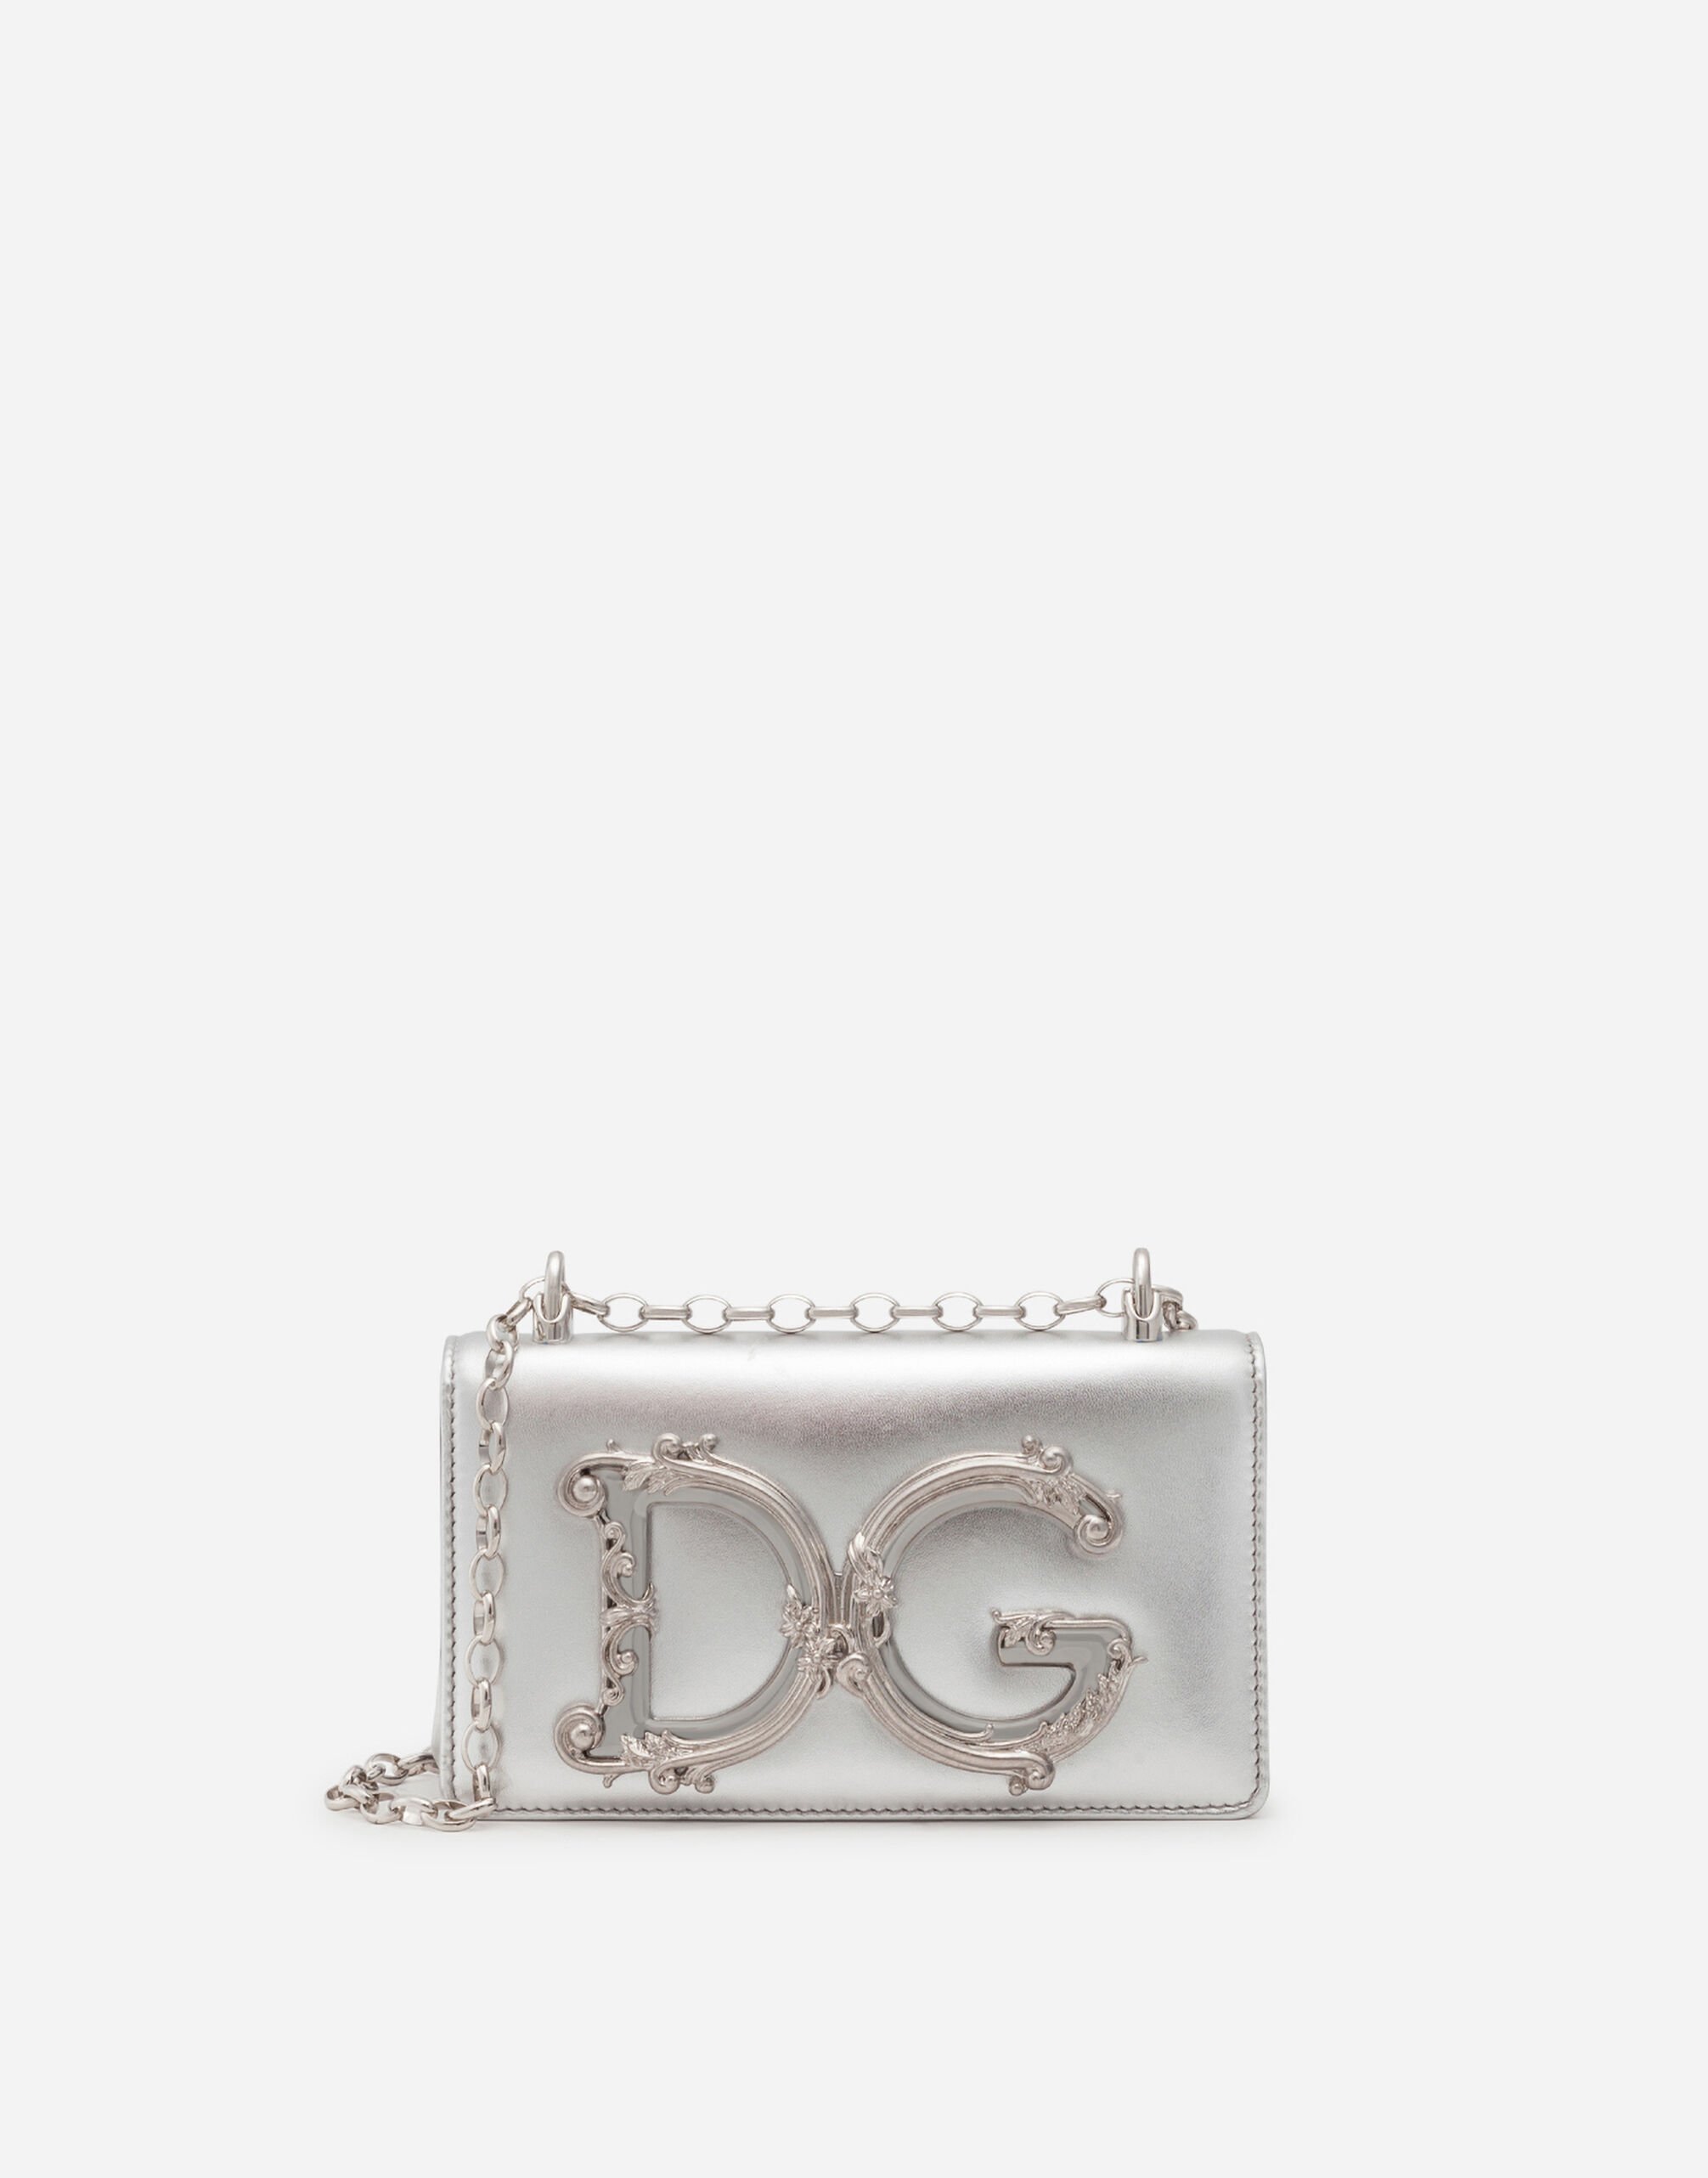 Dolce & Gabbana DG Girls phone bag in nappa mordore leather Gold/Black WEDC2GW0001